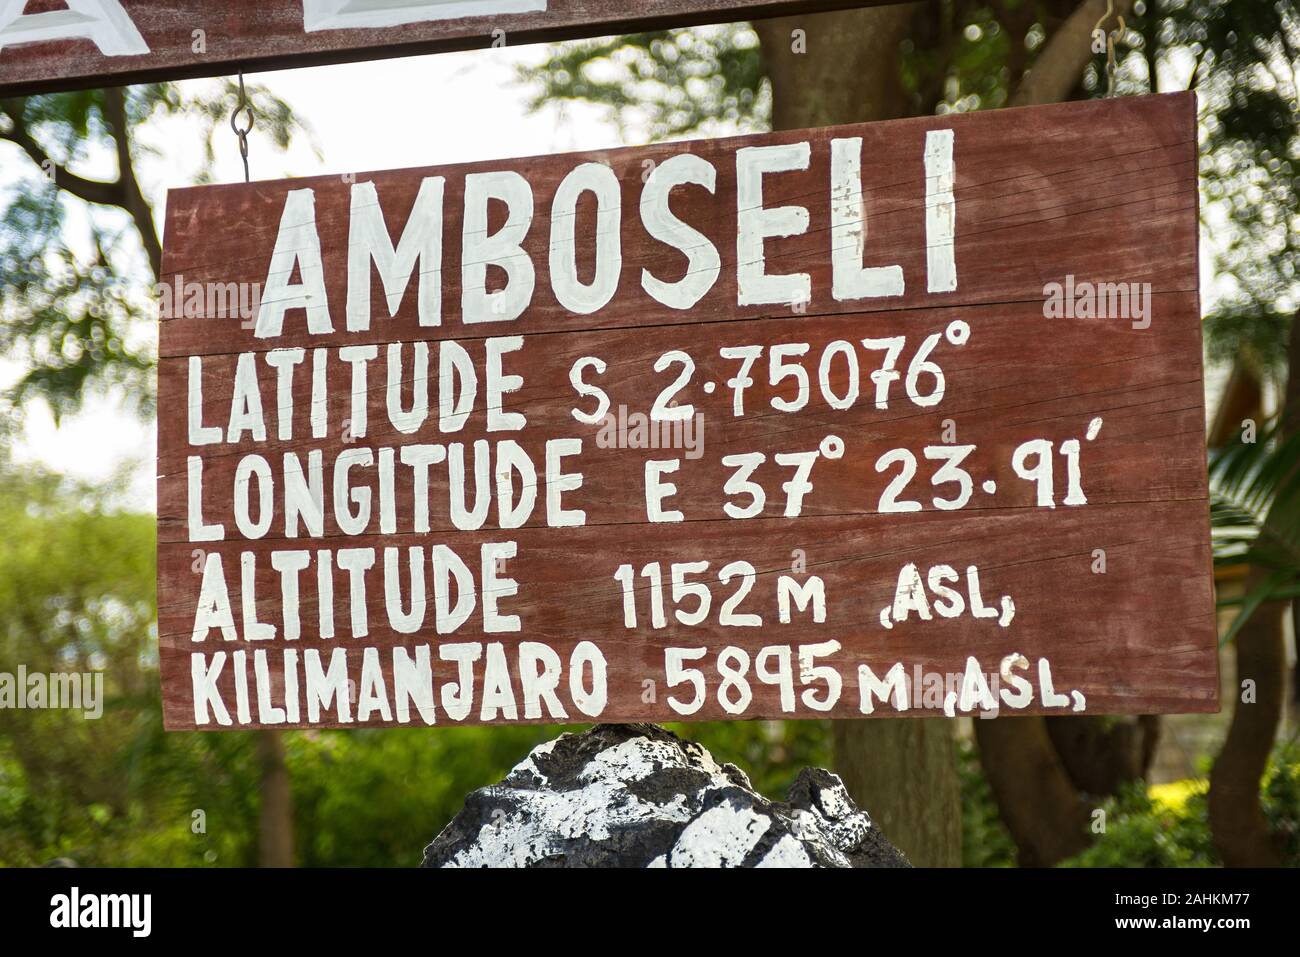 Wooden sign with latitude, longitude and altitude location details of Amboseli and Mount Kilimanjaro, Kenya, East Africa Stock Photo